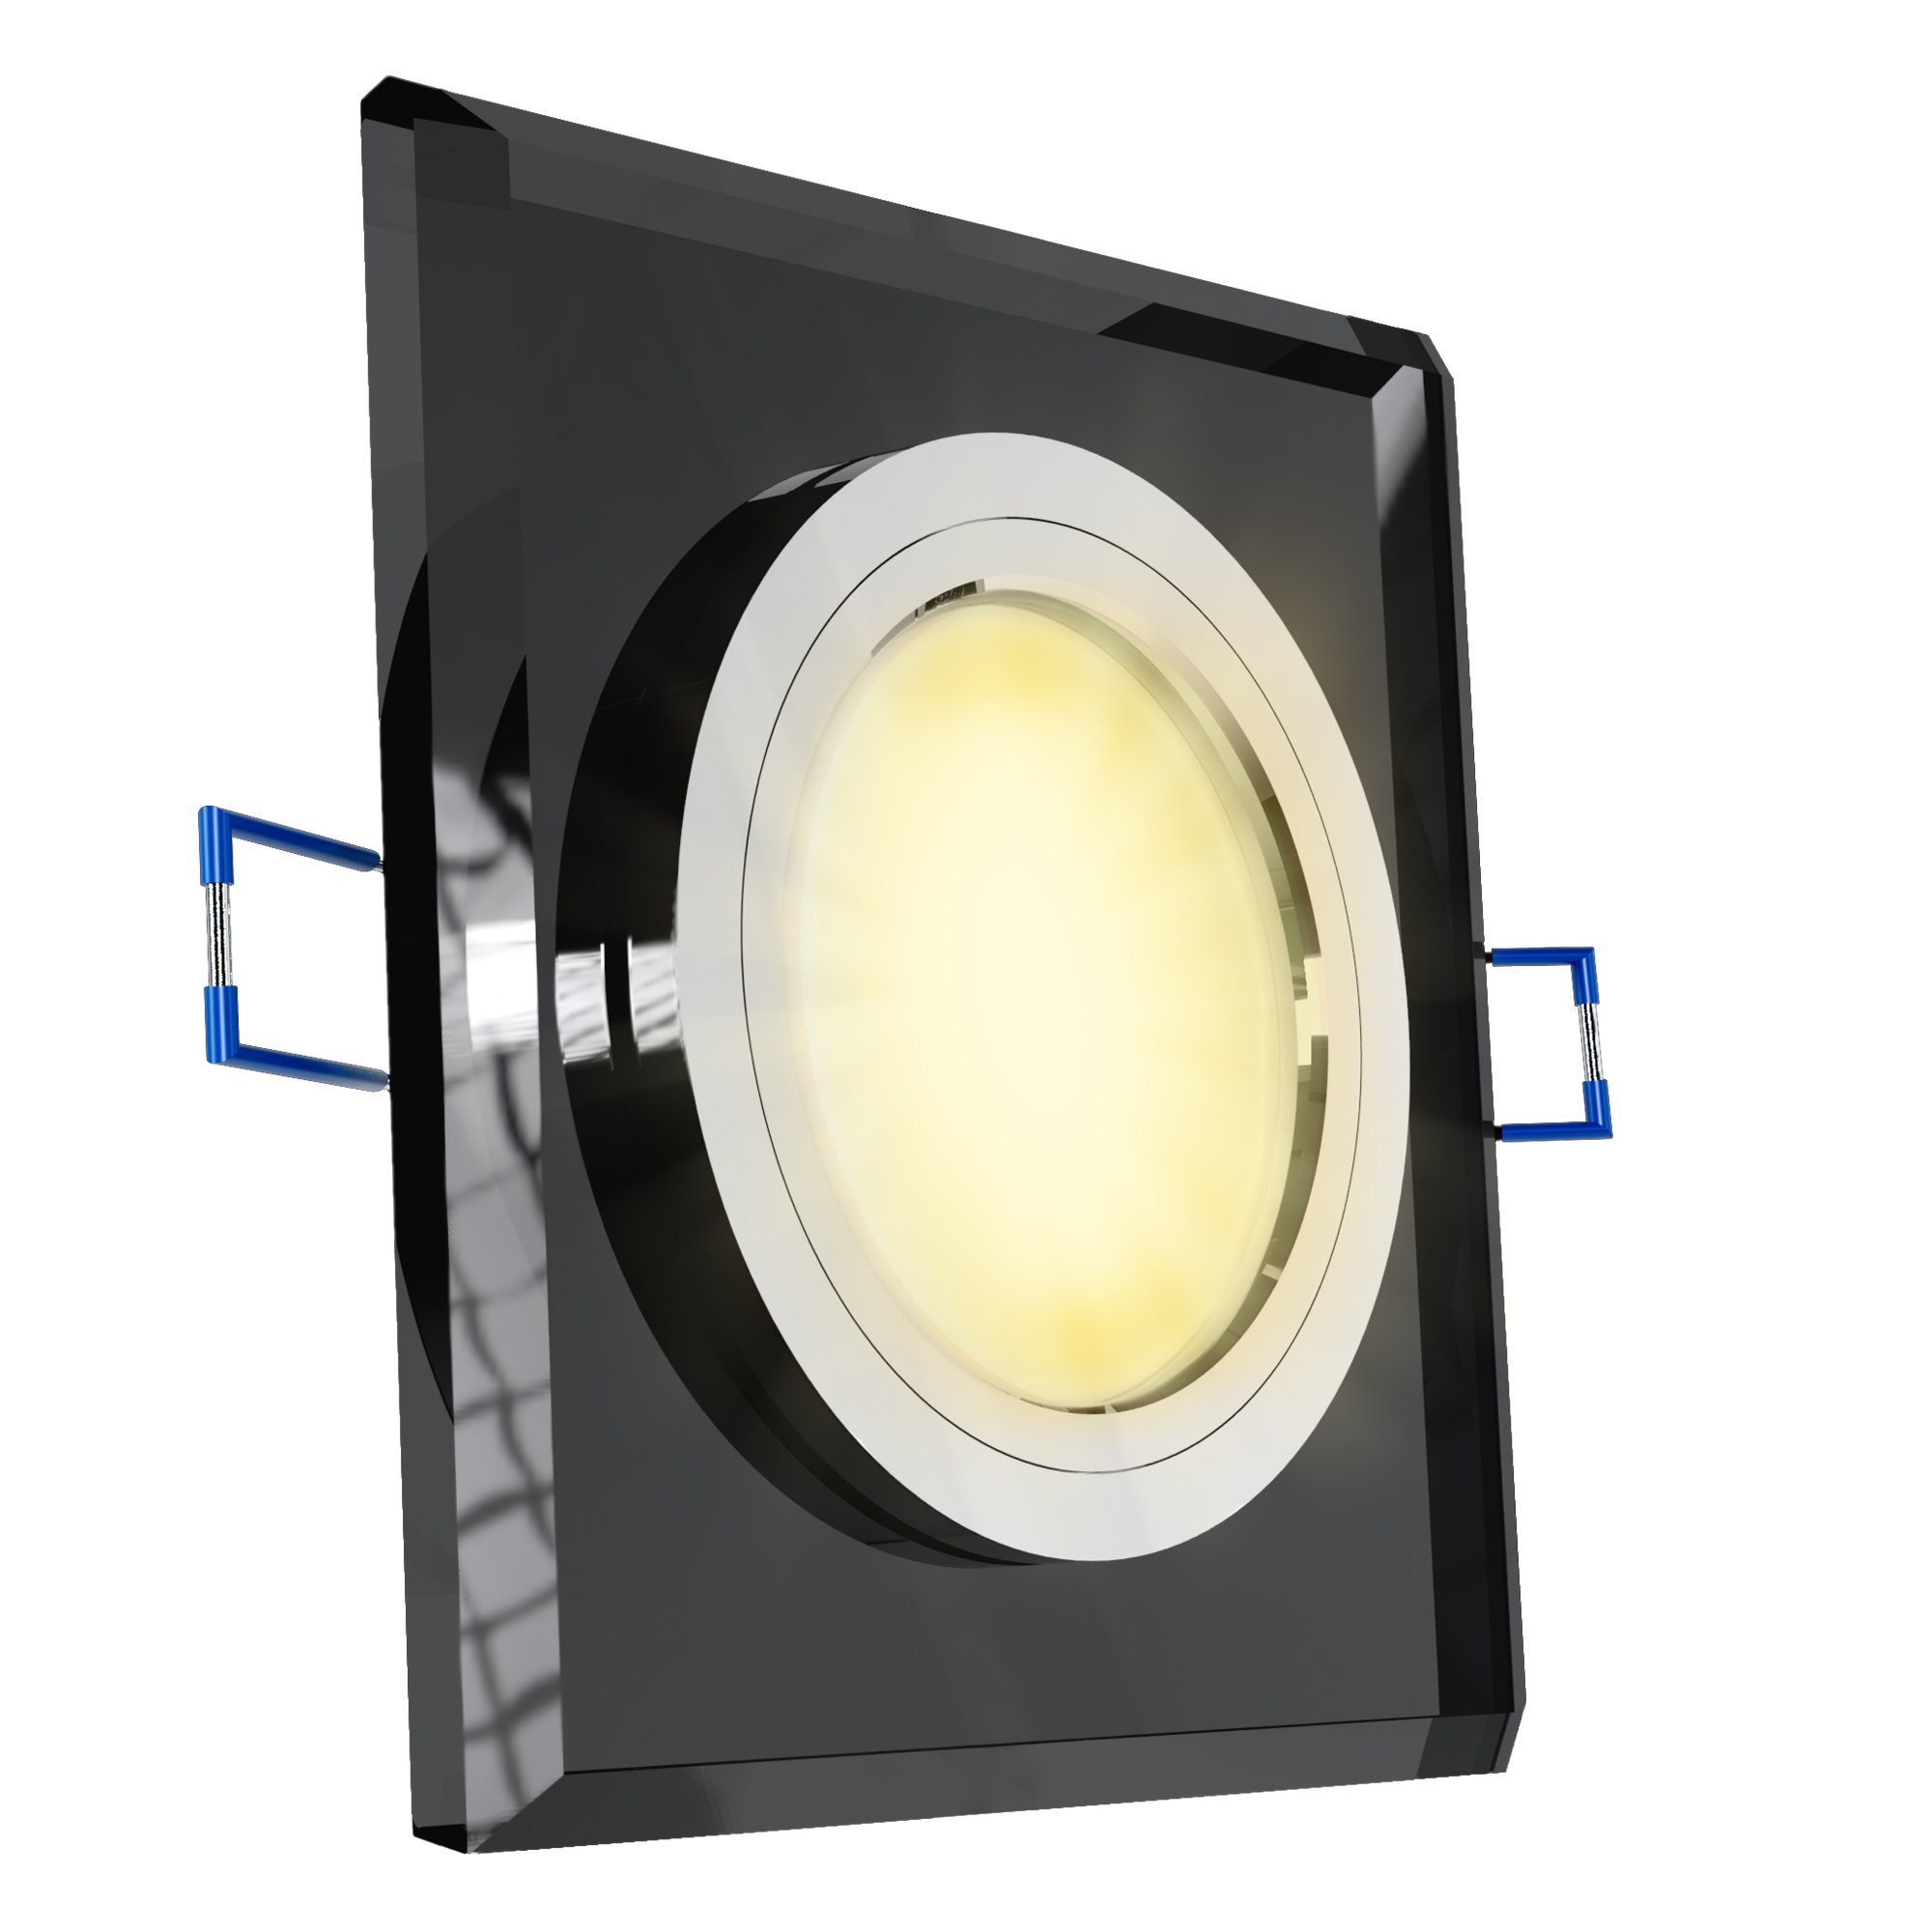 SSC-LUXon LED Einbaustrahler Flacher LED Einbaustrahler aus Glas eckig schwarz mit LED Modul 230V, Extra Warmweiß